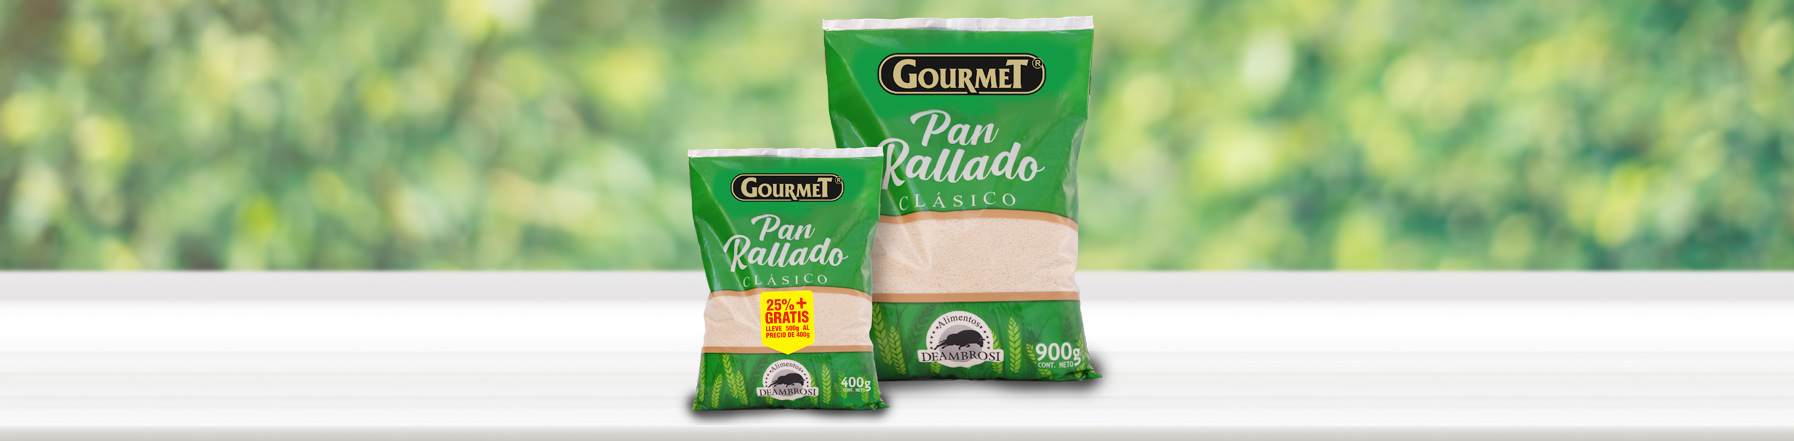 Pan Rallado Gourmet